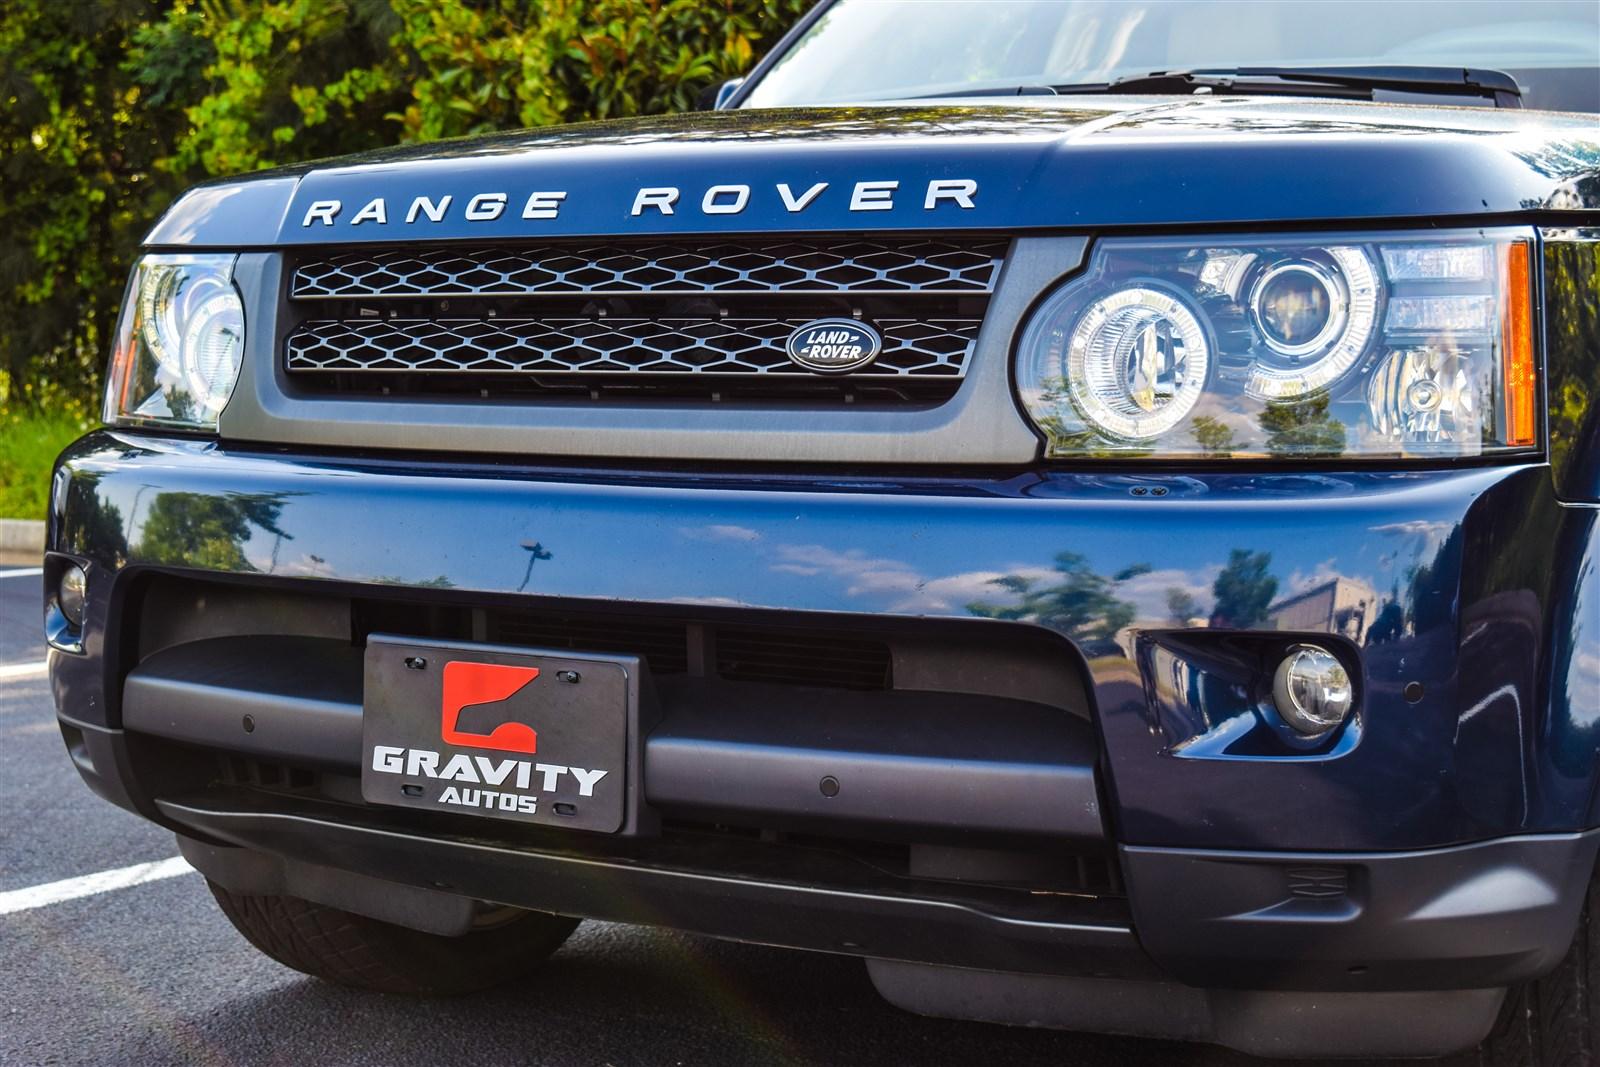 Used 2011 Land Rover Range Rover Sport HSE for sale Sold at Gravity Autos Marietta in Marietta GA 30060 6